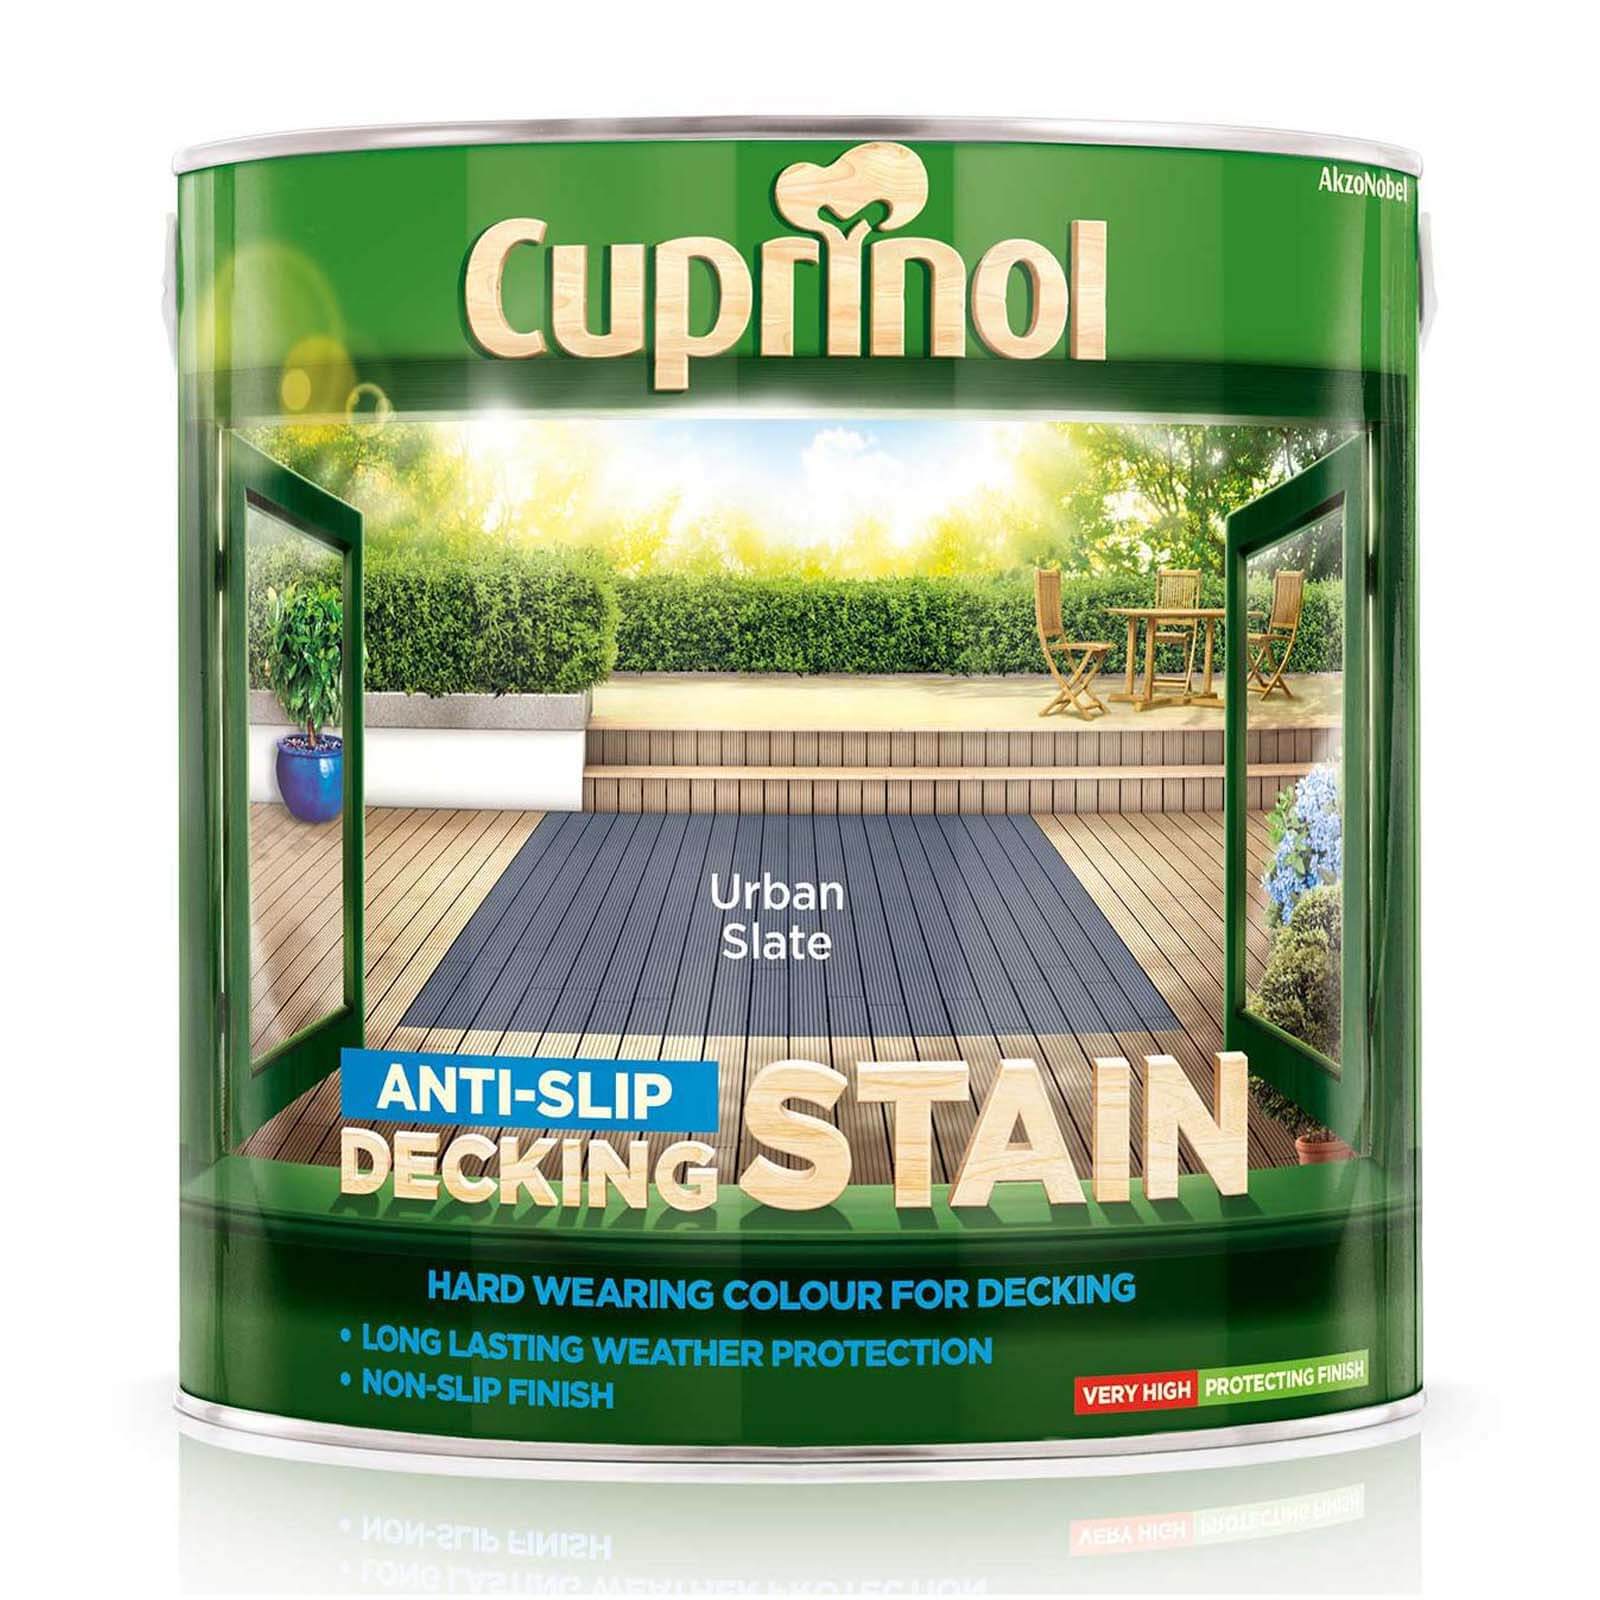 Cuprinol Anti-Slip Decking Stain Urban Slate - 2.5L